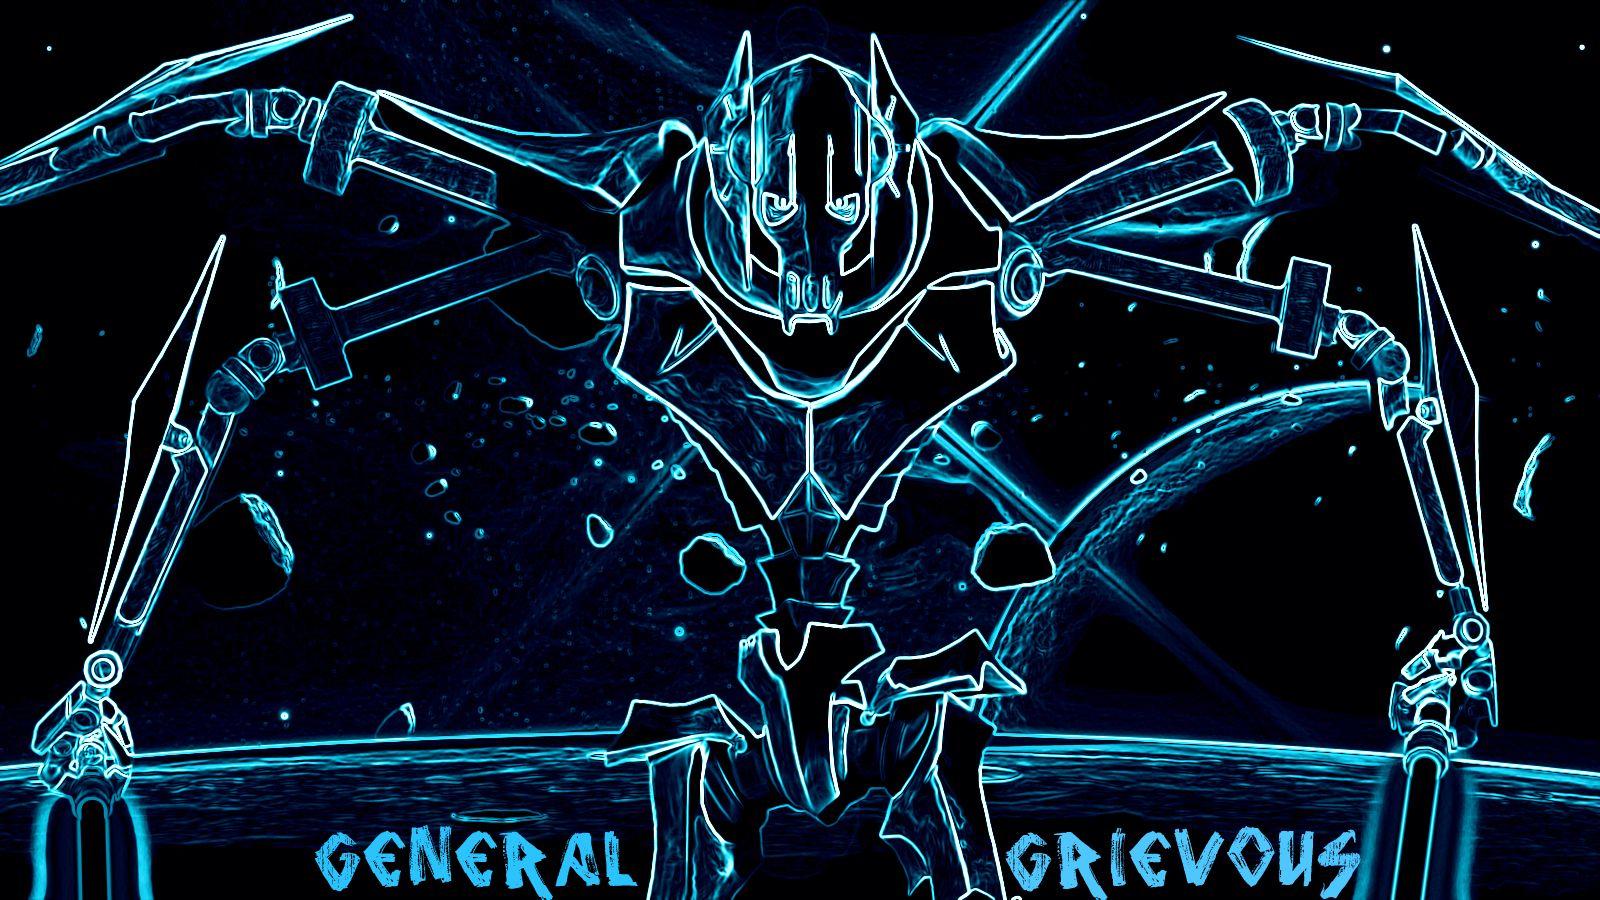 General Grievous Wallpaper. The Star Wars Underworld